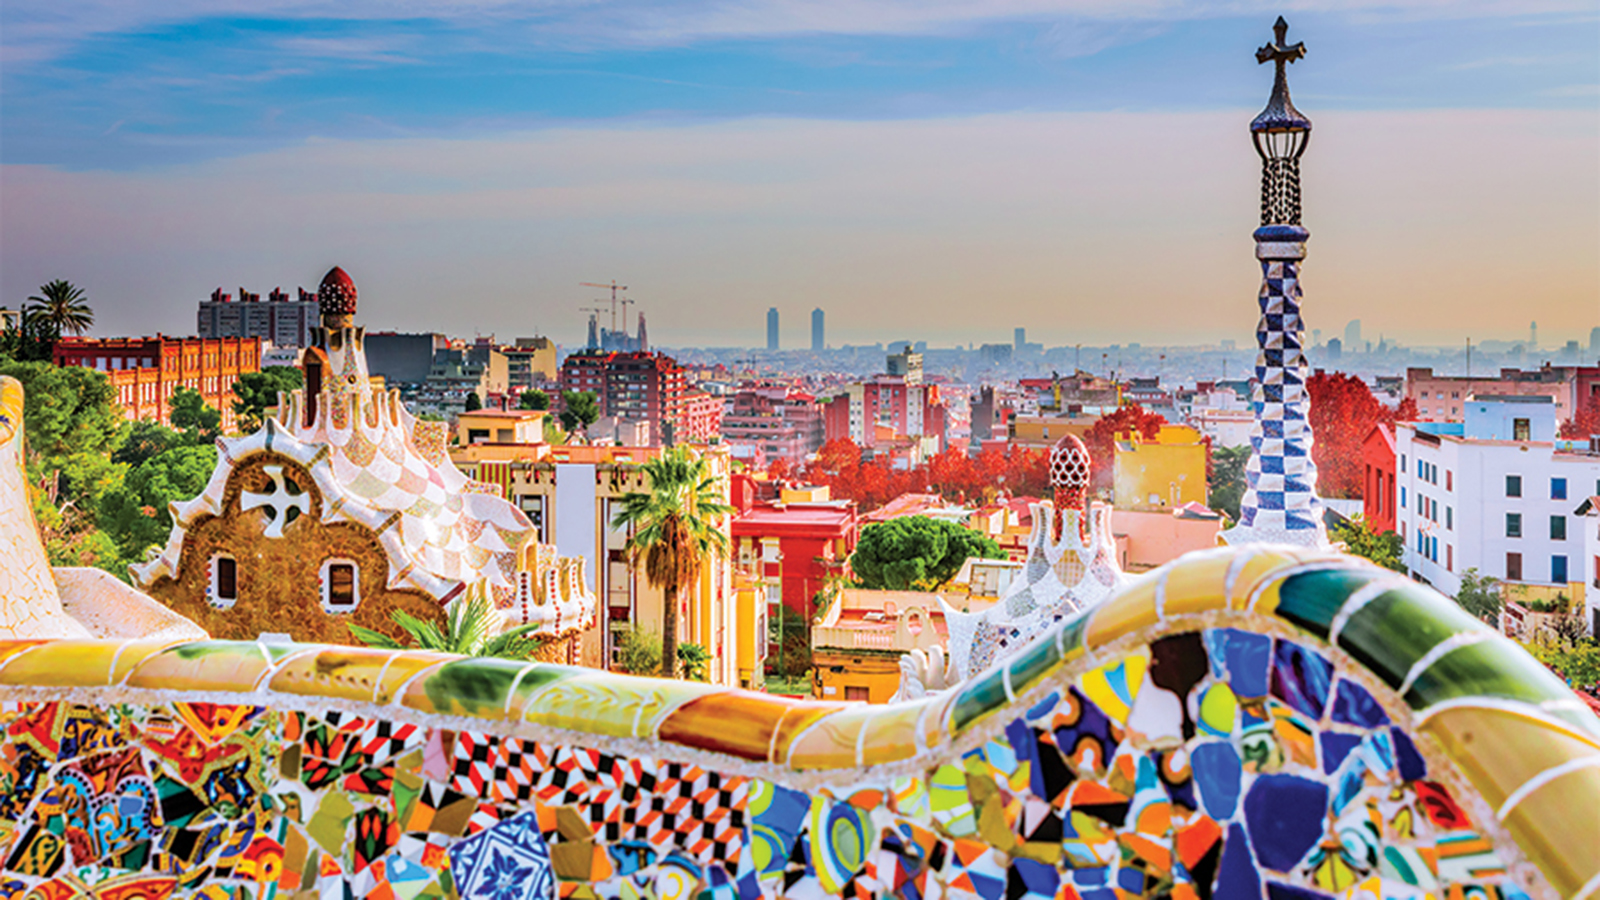 Barcelonas imaginative Park Guell